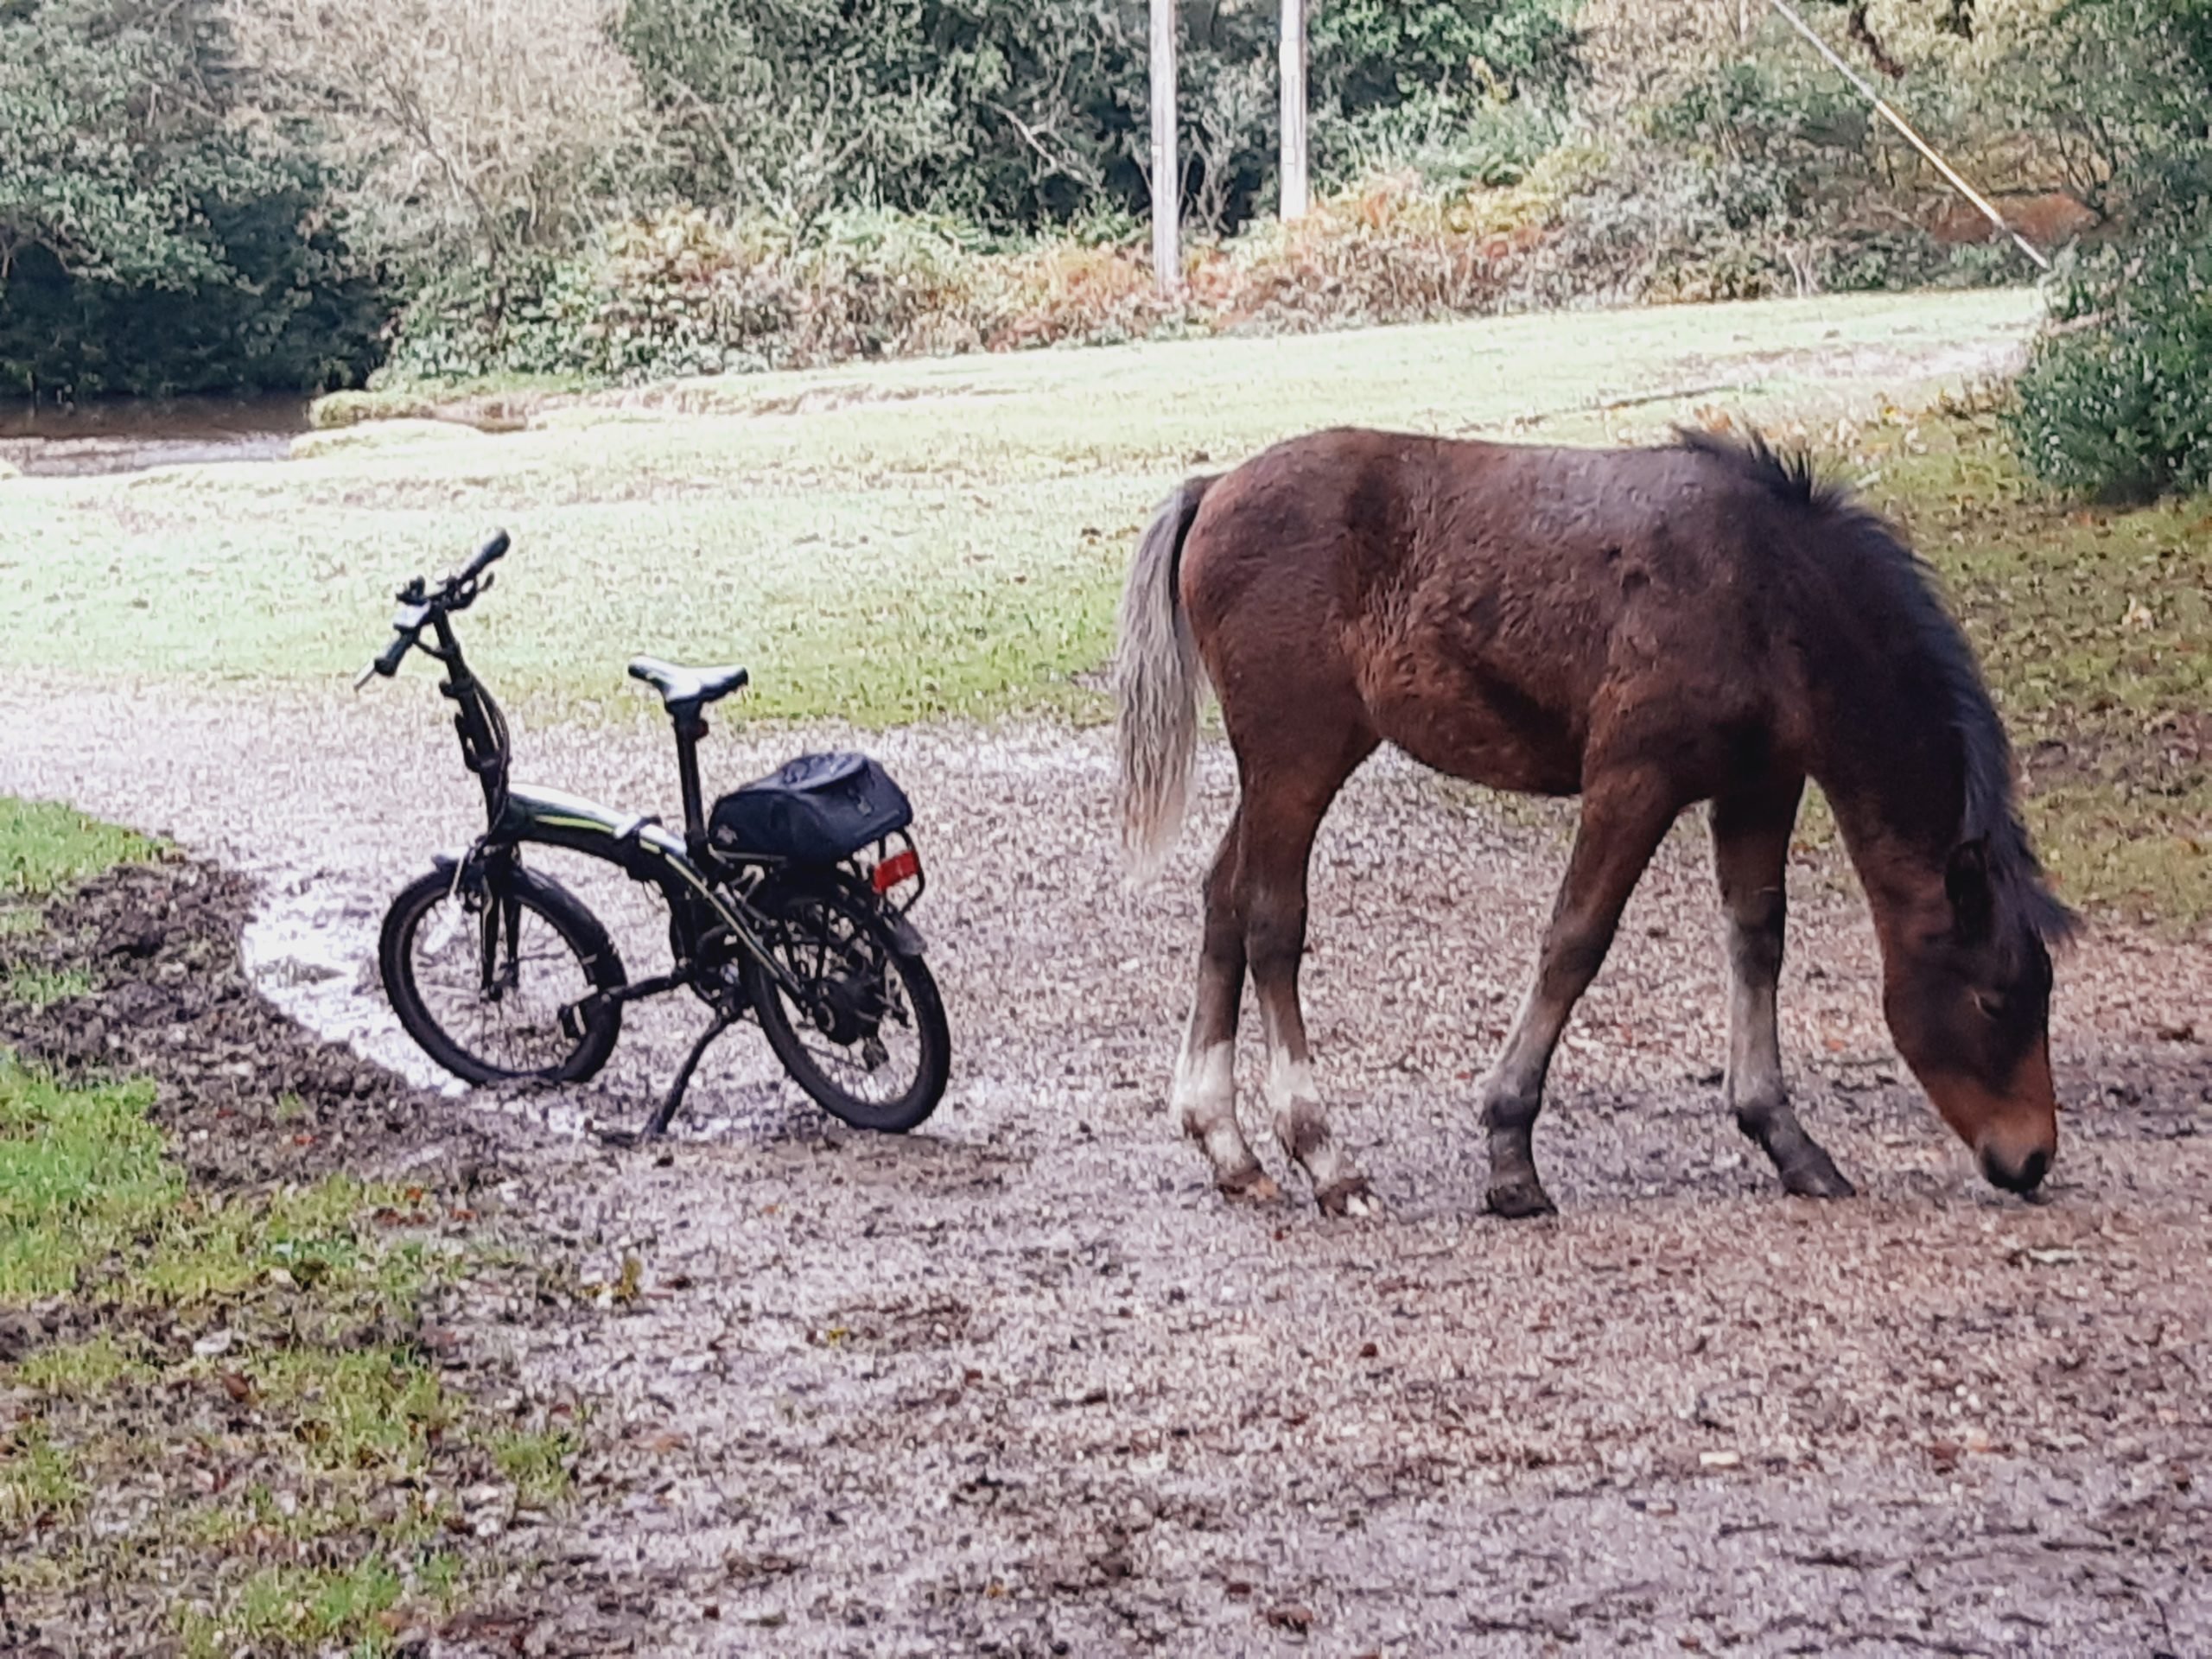 A New Forest pony next to a bike